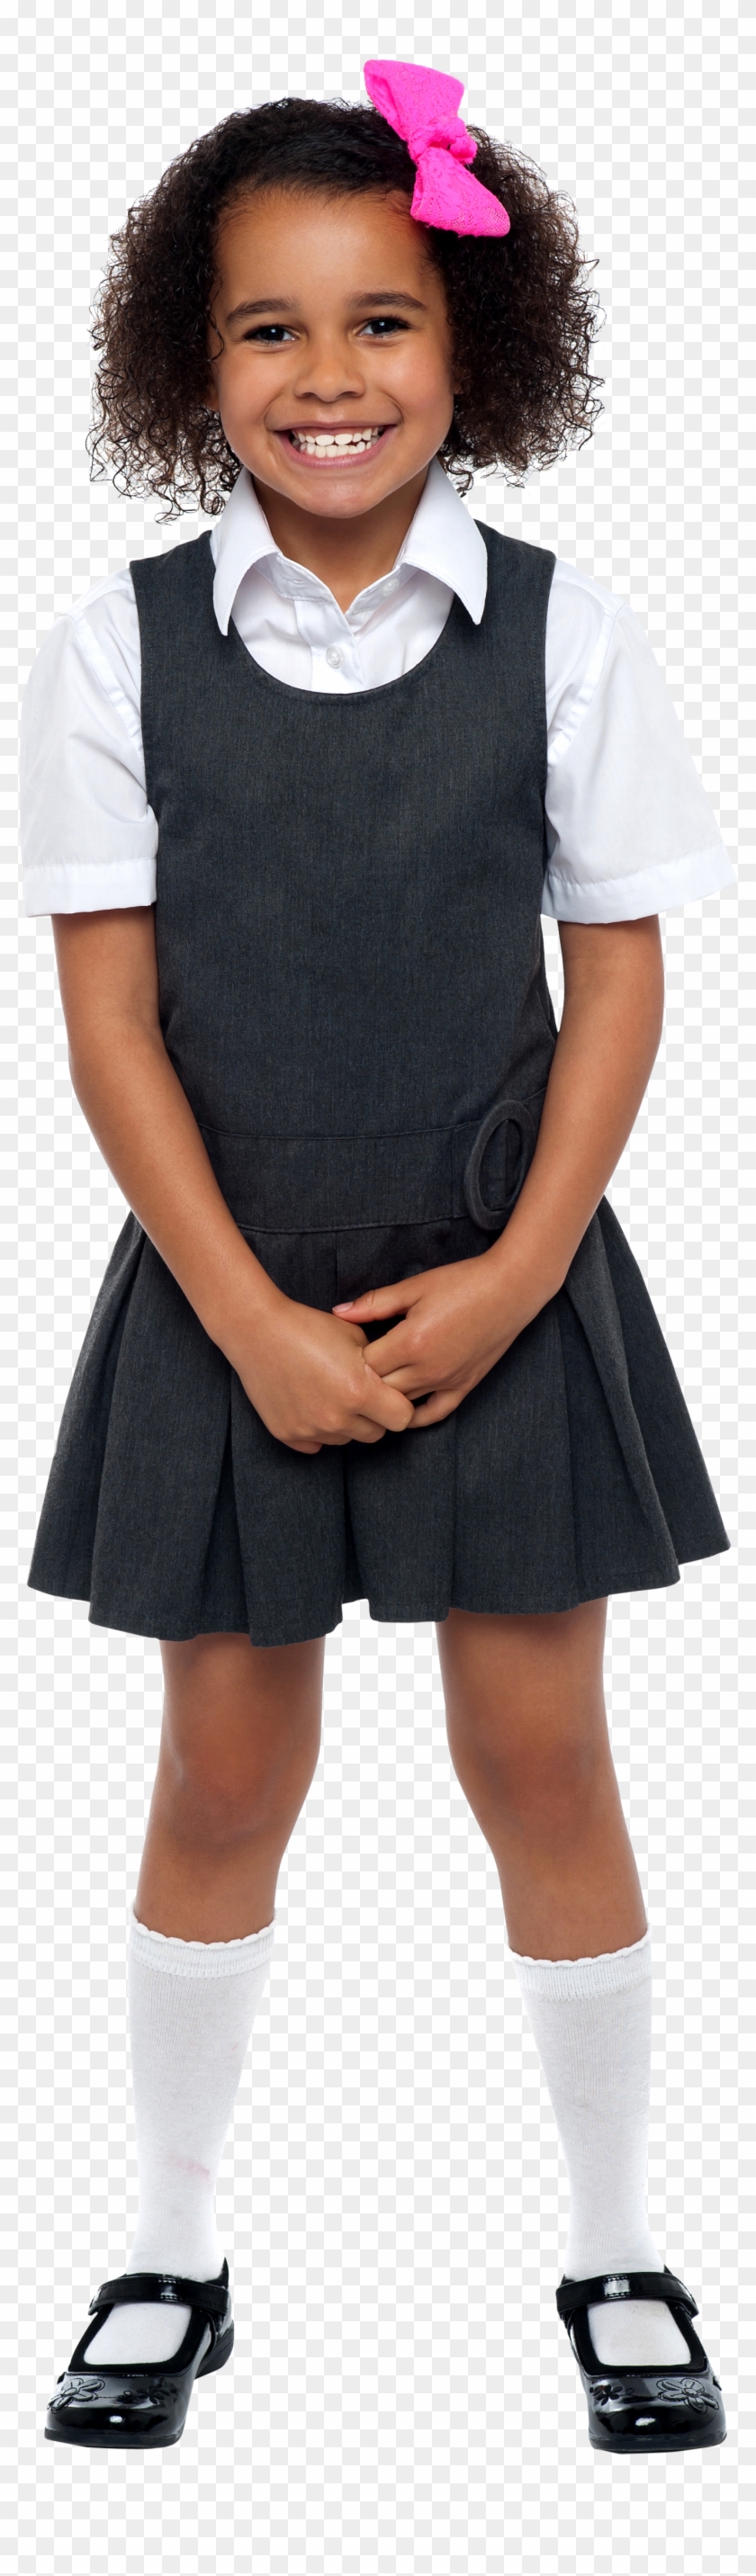 Cute Girl - School Child Clipart #1224860